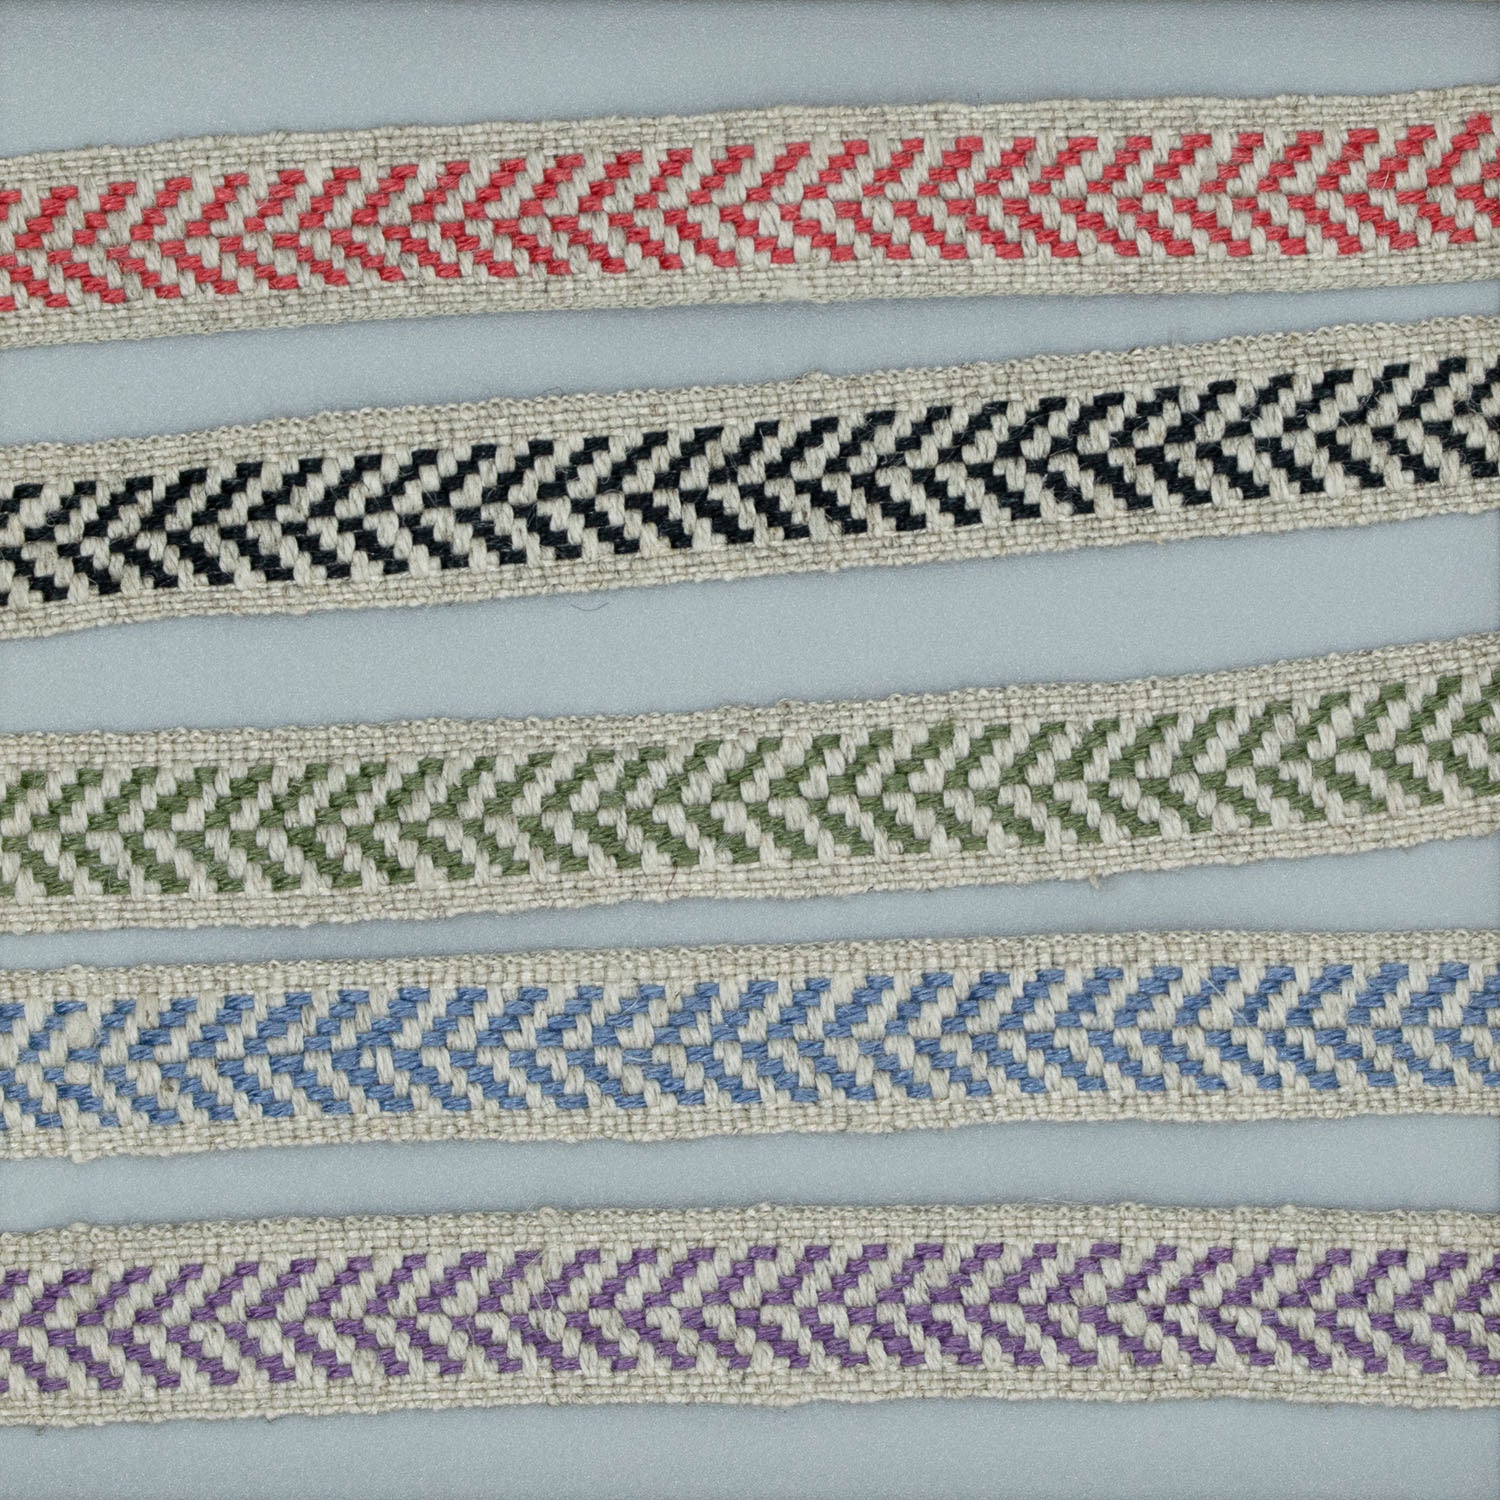 Five colors of linen twill chevron tape in 3/8 inch width